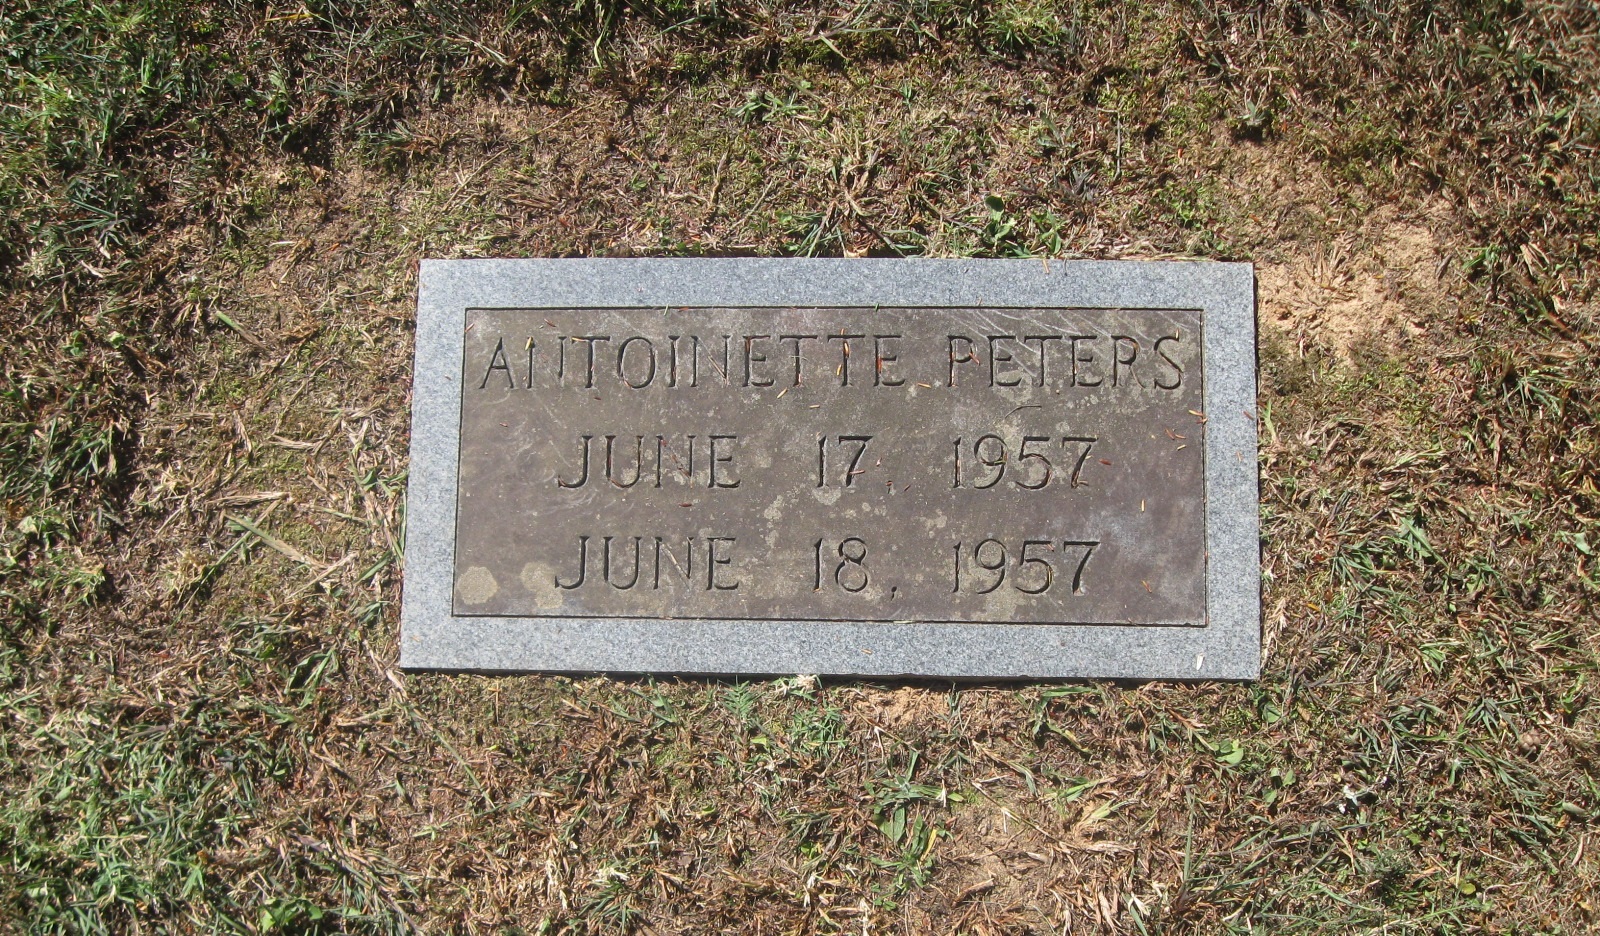 Antoinette Peters Grave